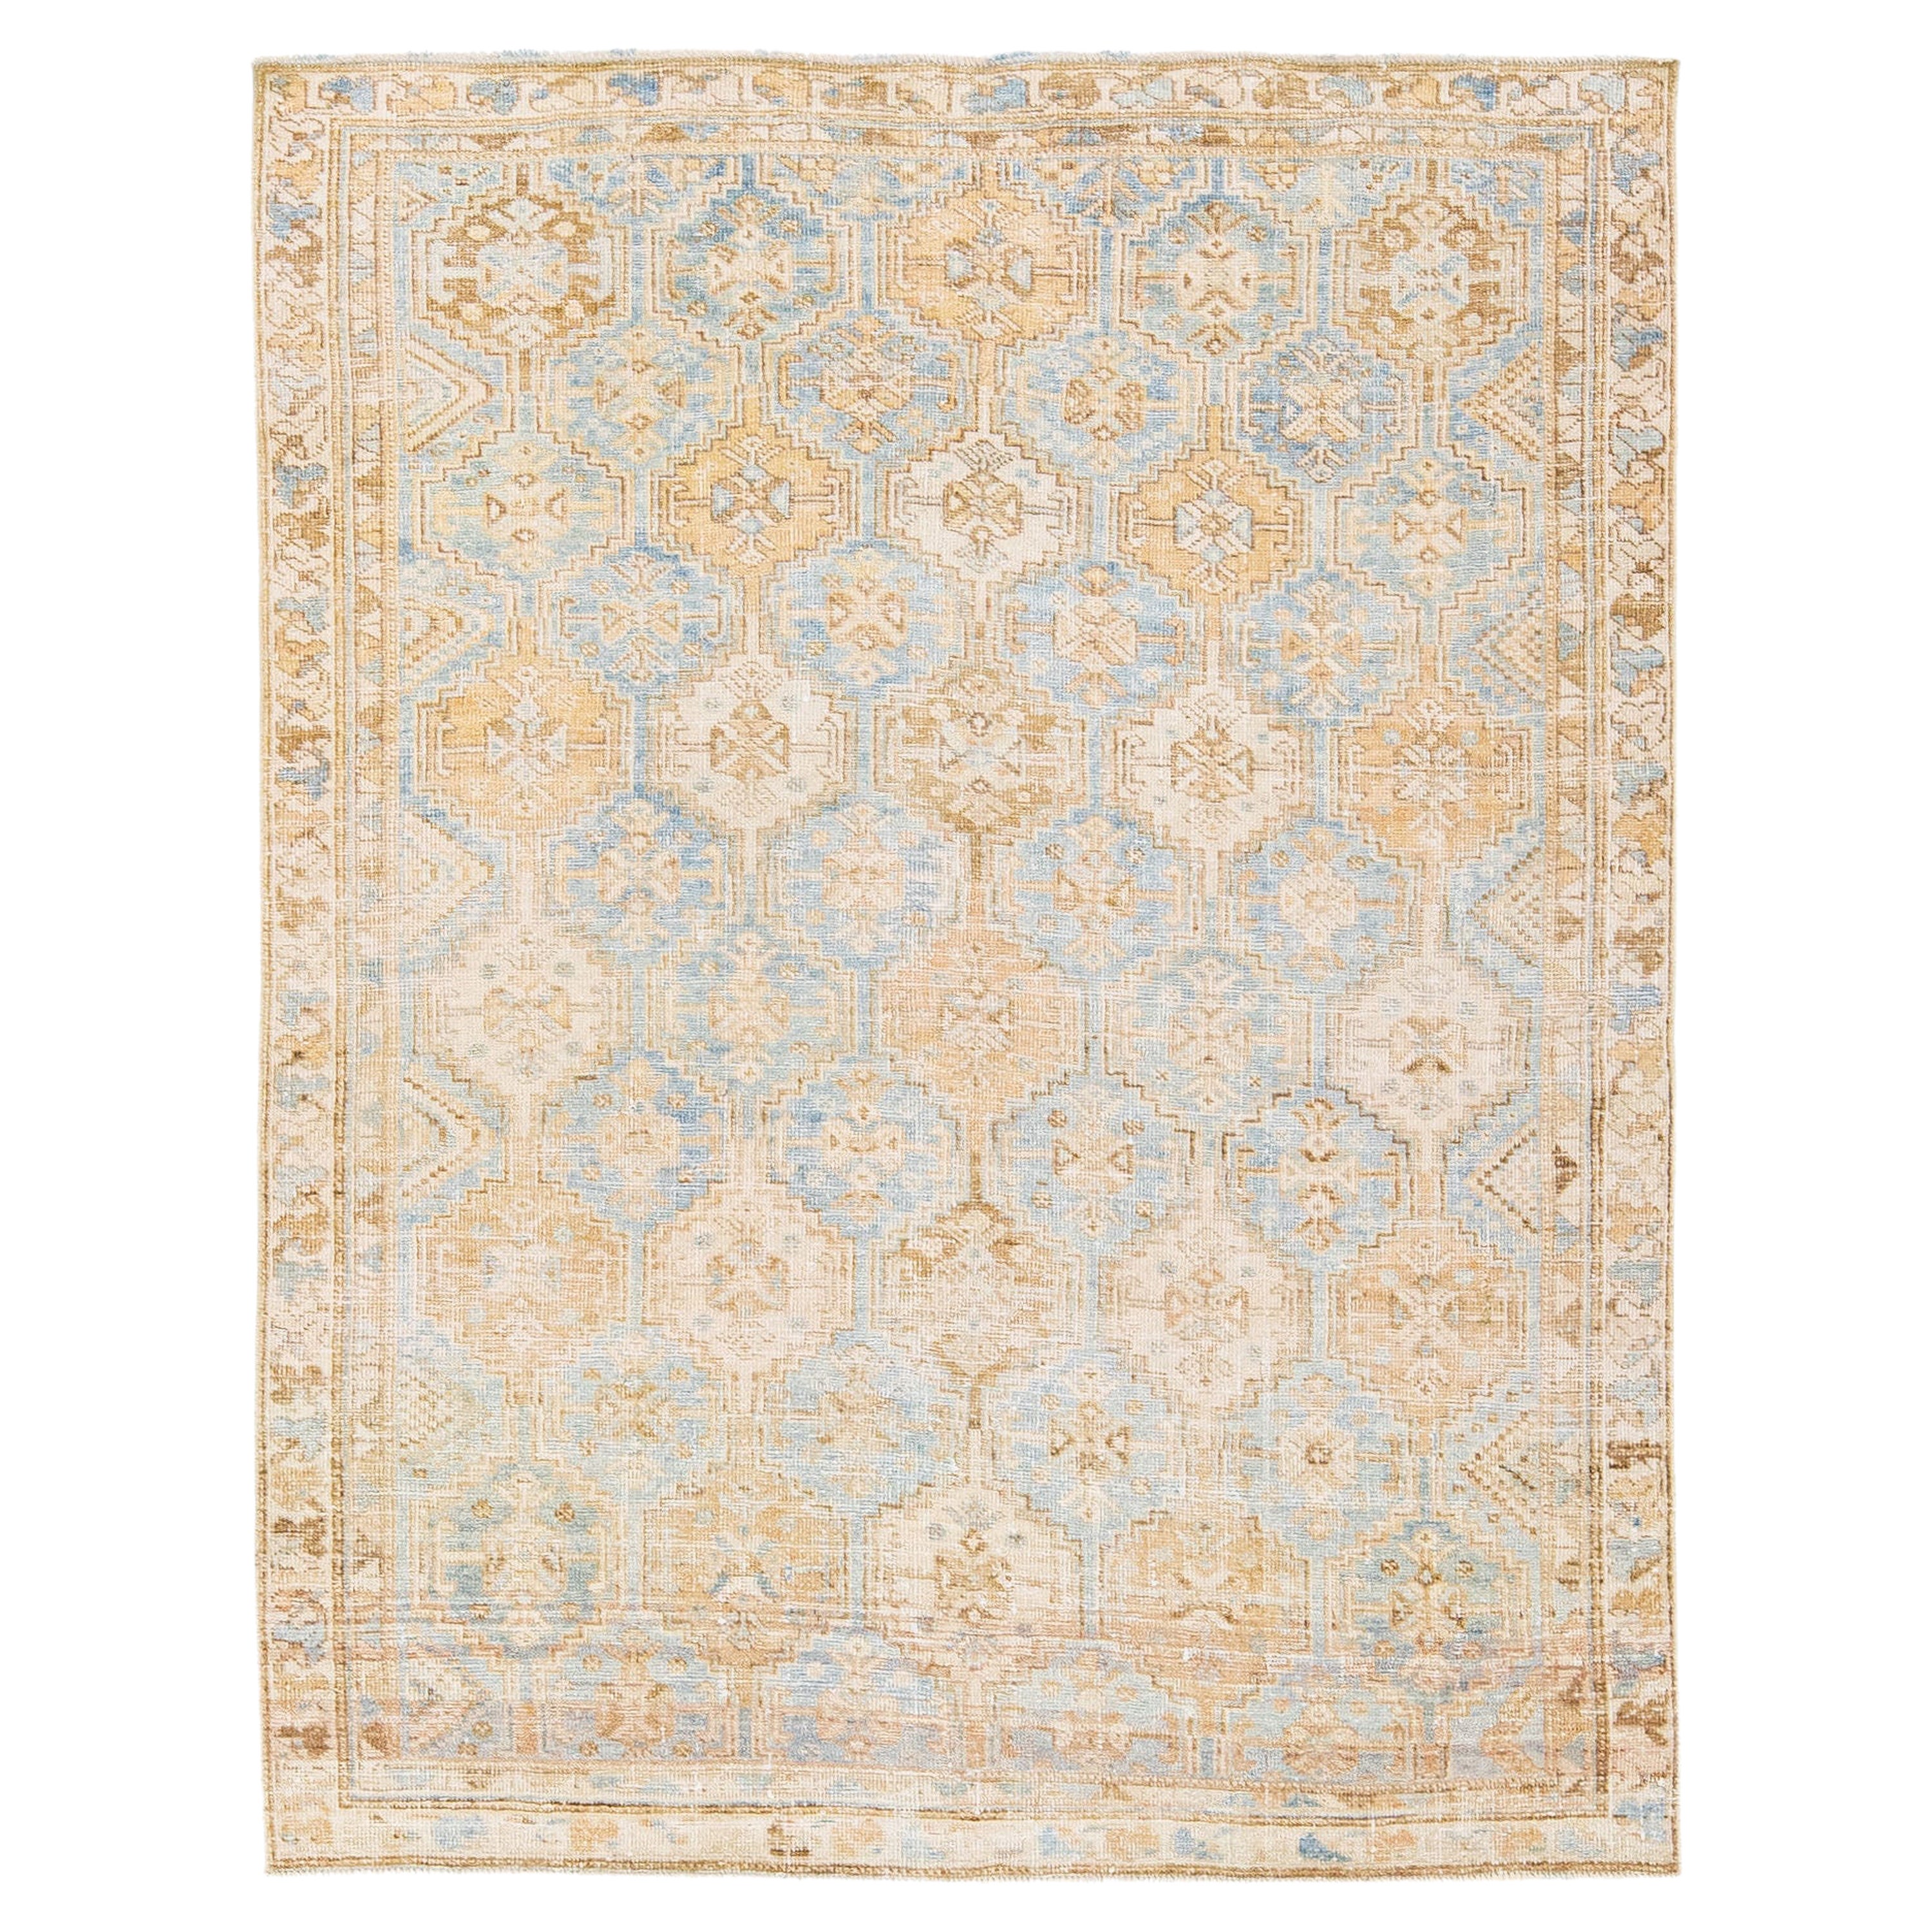 Antique Persian Mahal Handmade Beige & Blue Wool Rug with Geometric Design